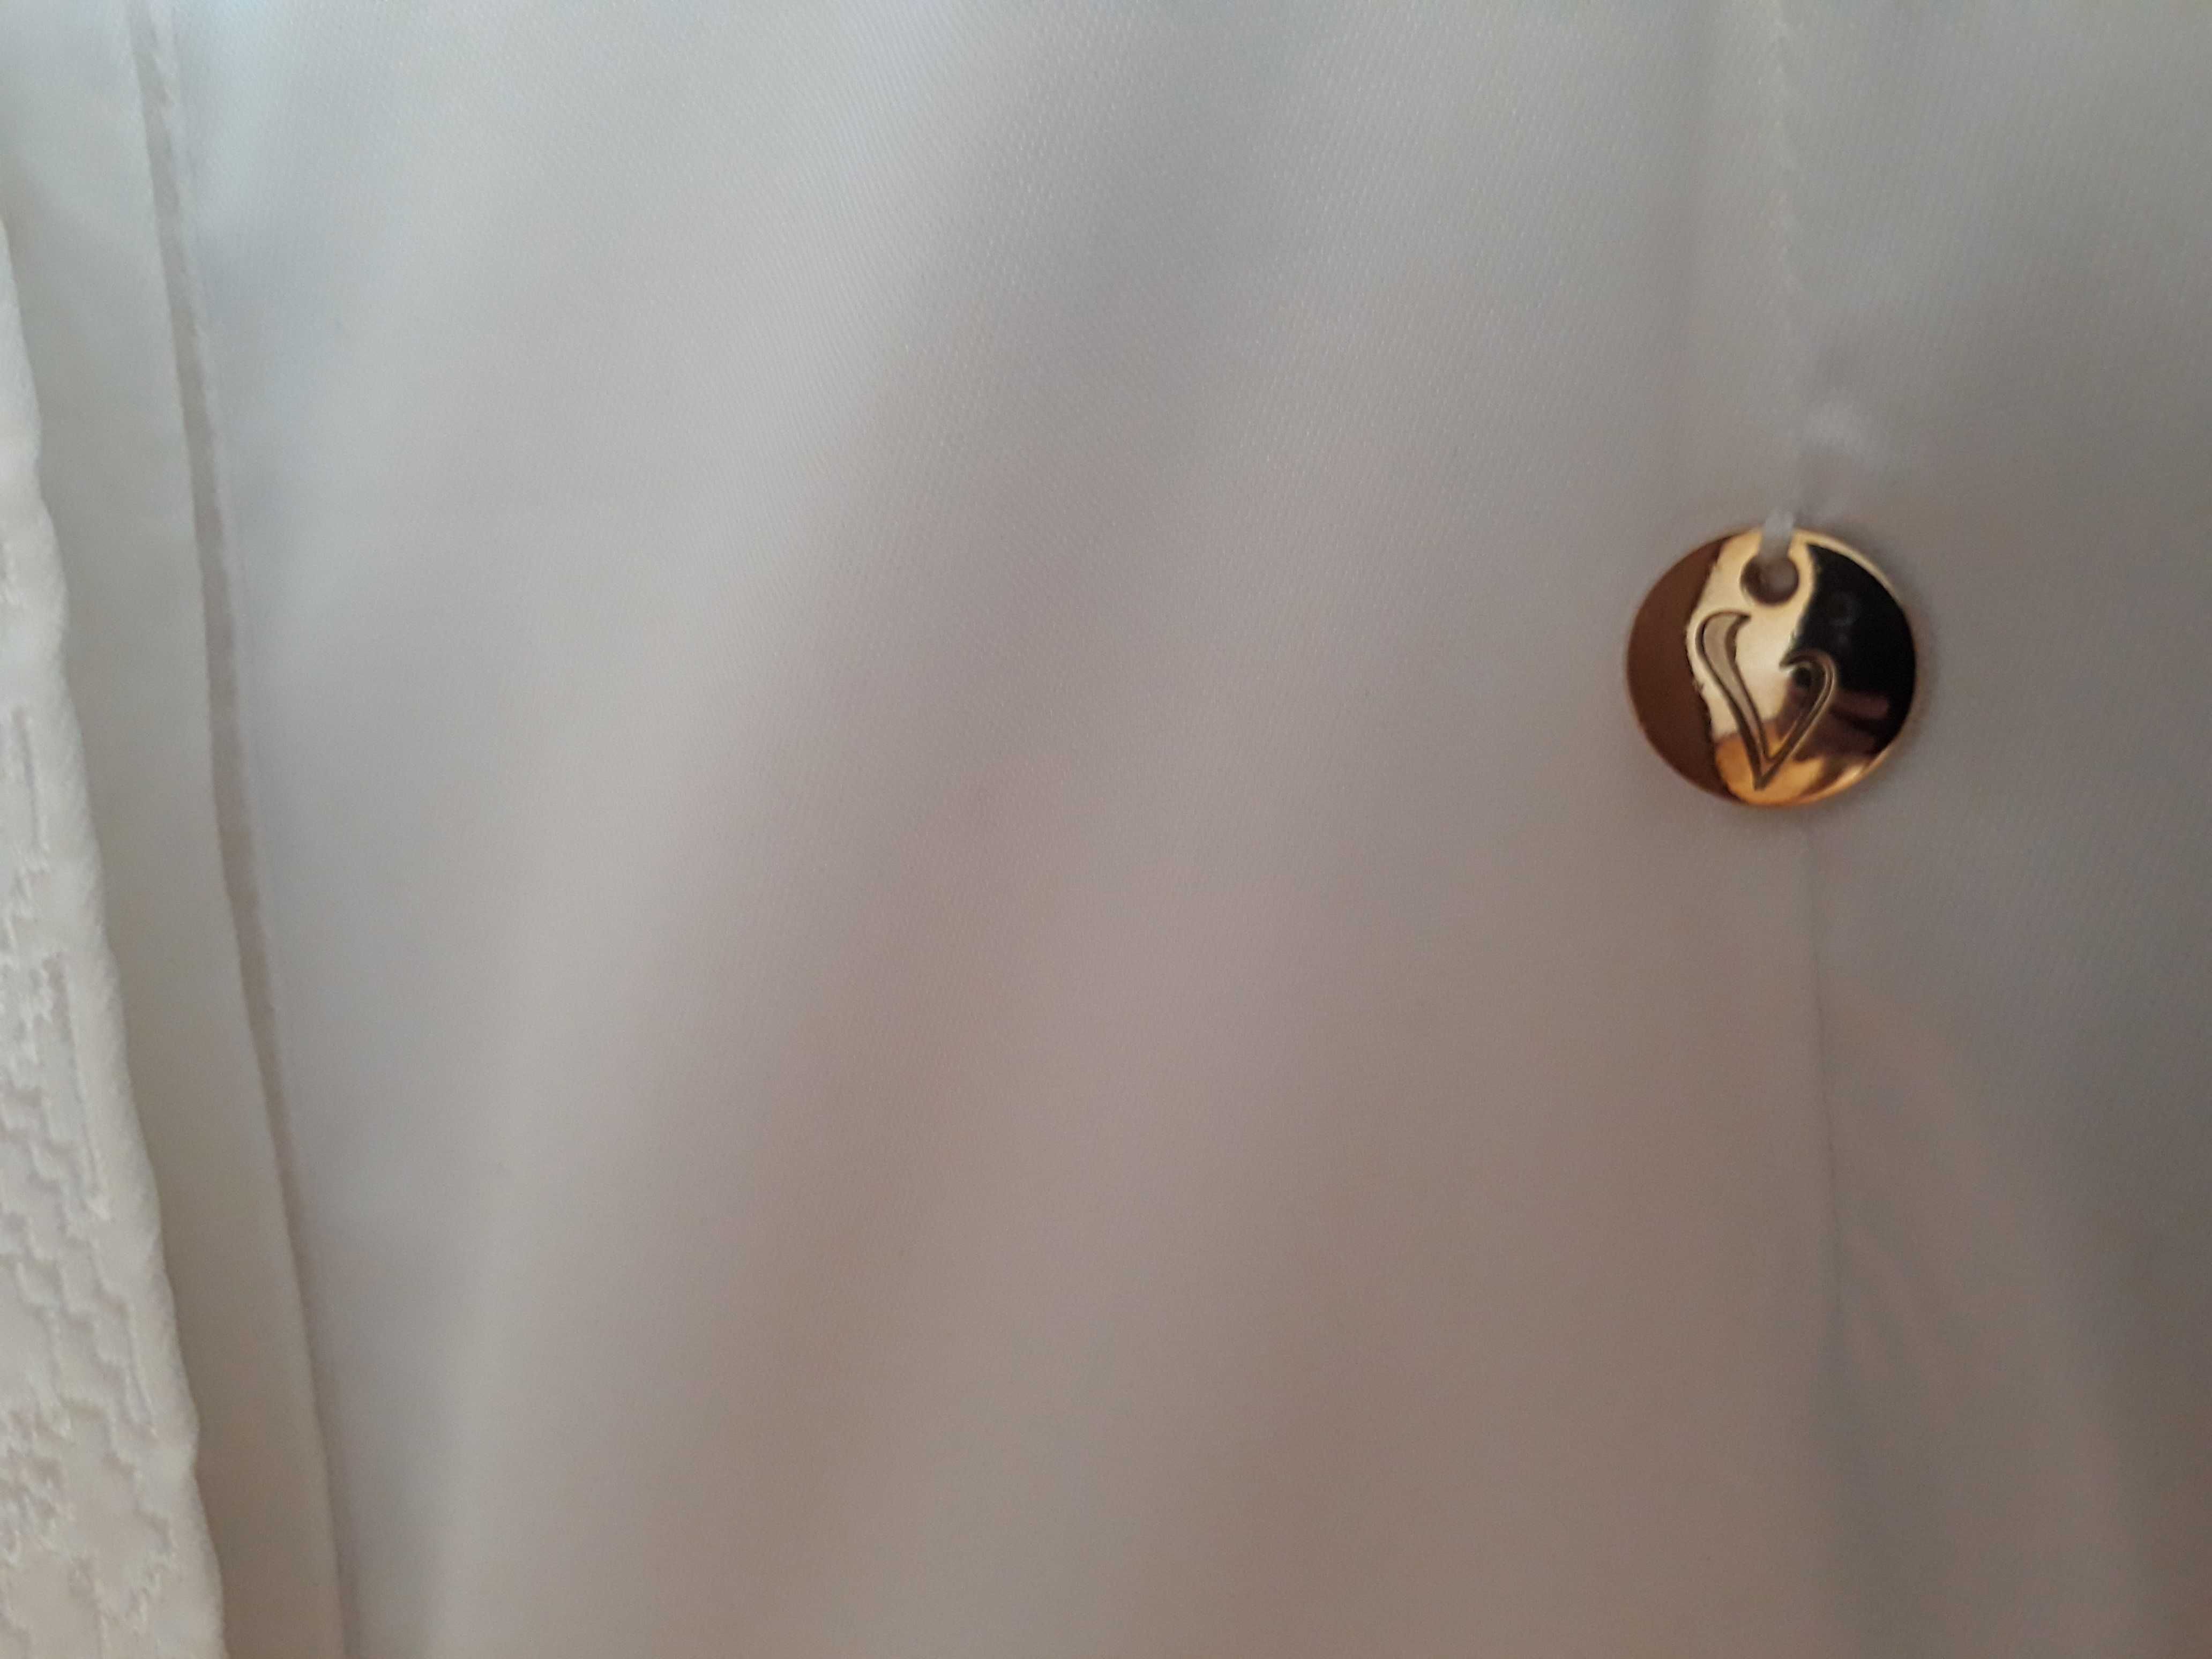 Блузка белая шелковая изящная на выход VANGELIZA из Стамбула.  Р 44-46